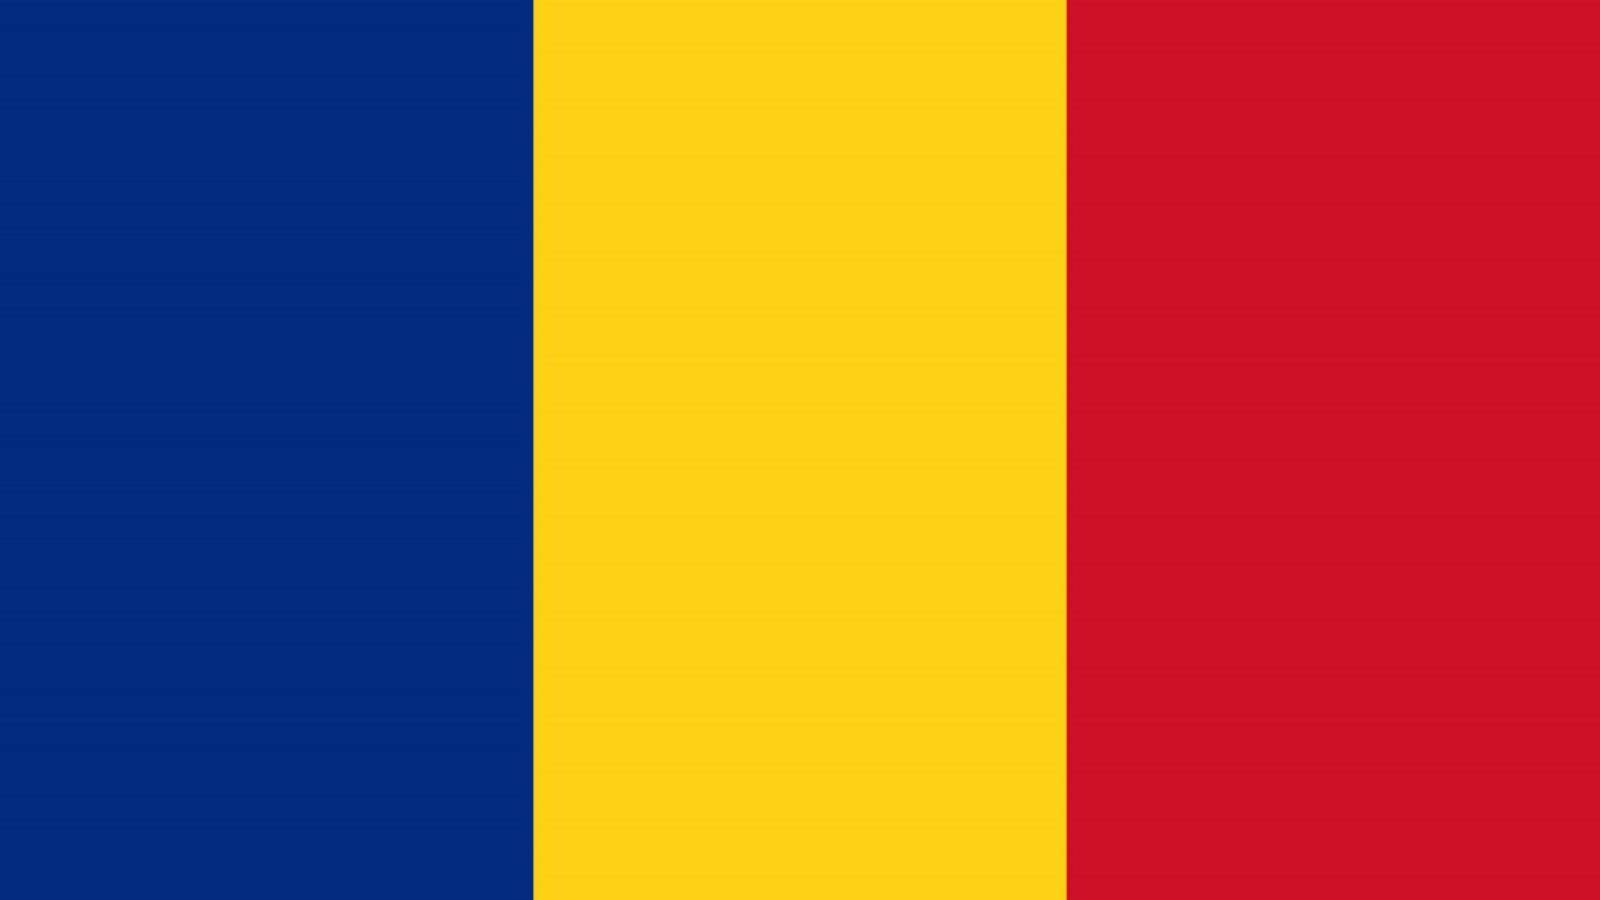 Rumania Problema alarmante Restricciones urgentes